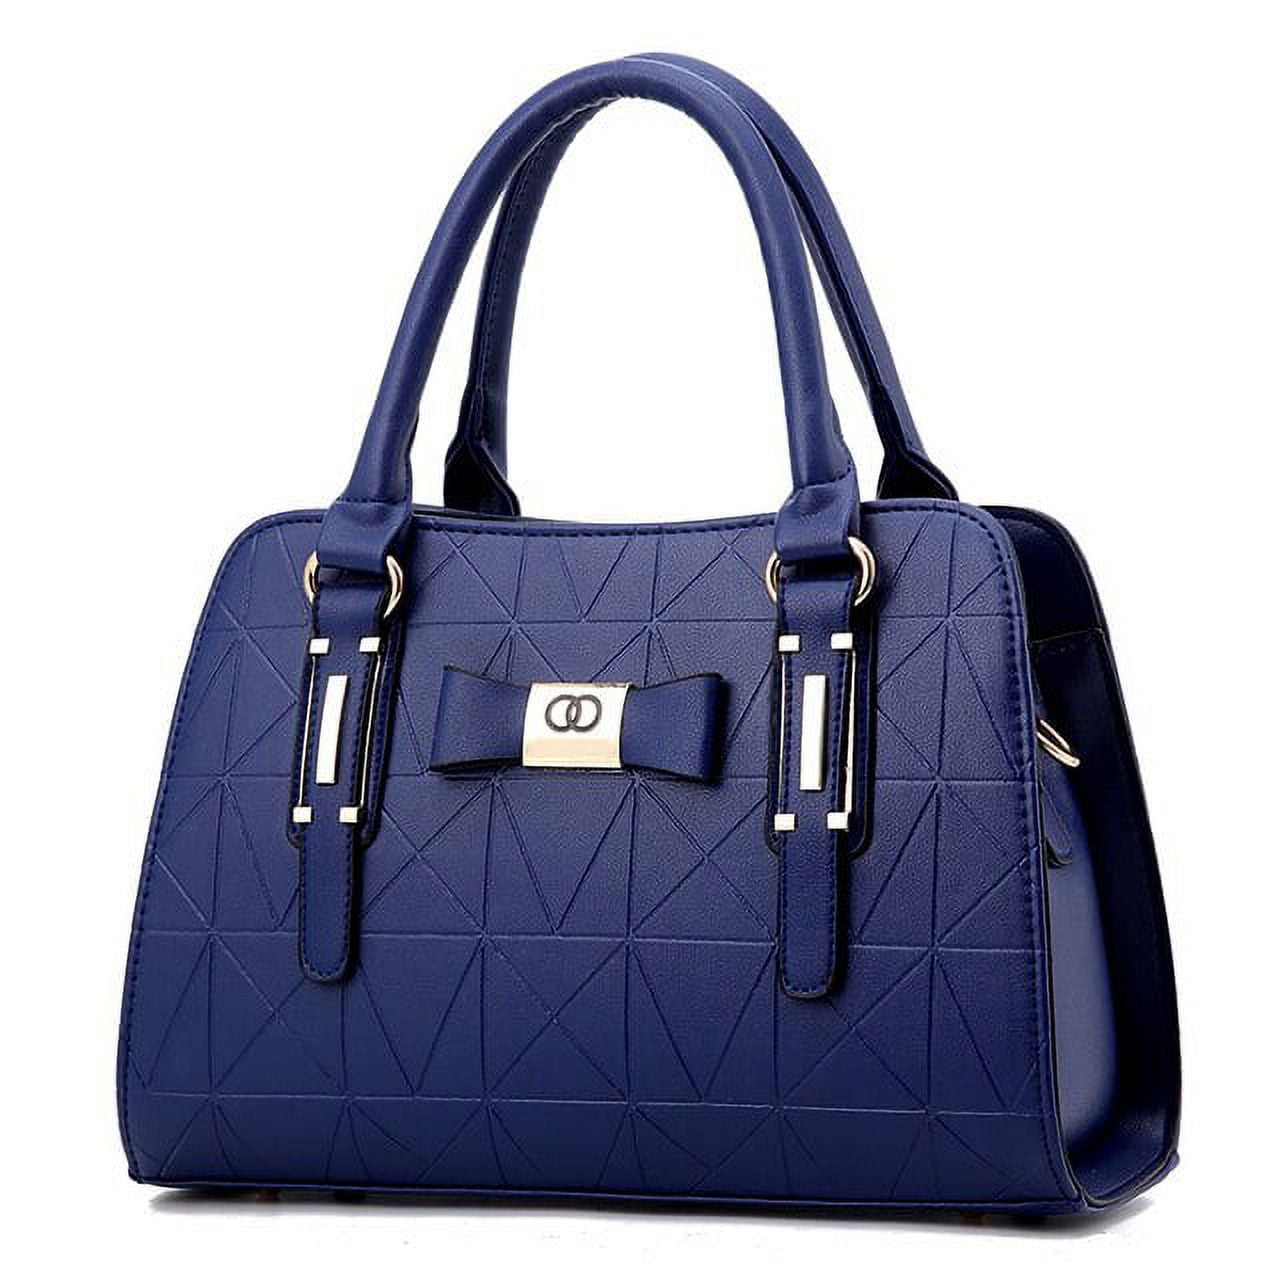 CoCopeaunt Luxury Handbags Designer Fashion Handbag New Women